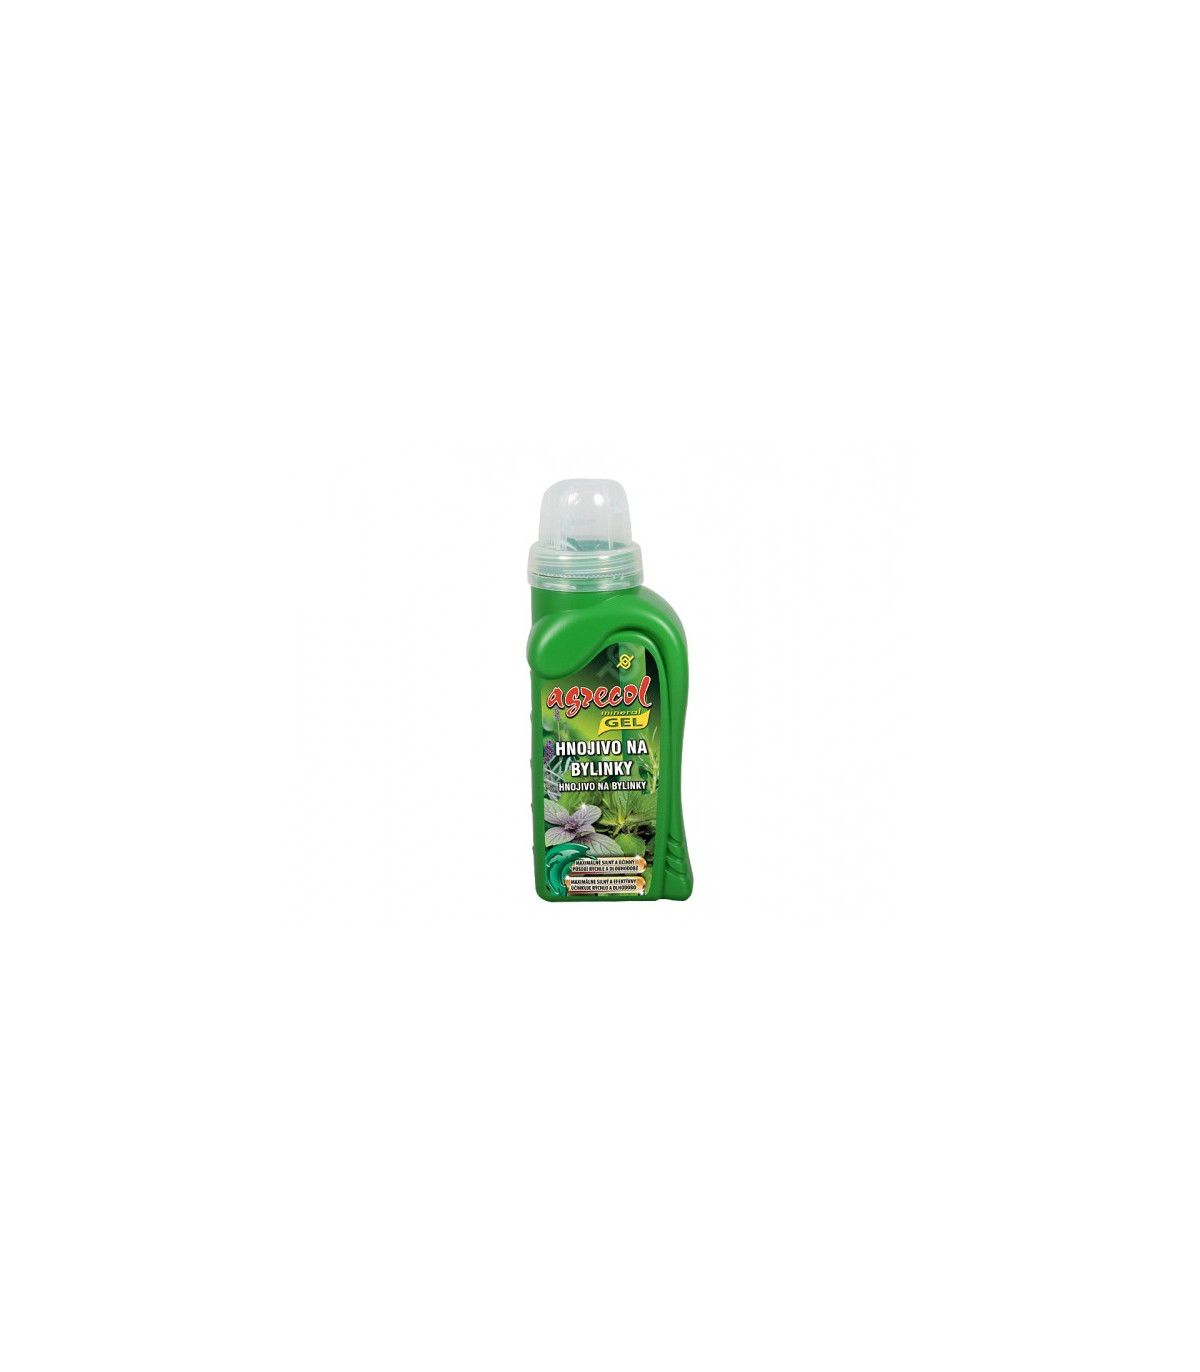 Hnojivo na pro bylinky - gel - Agrecol -  250 ml